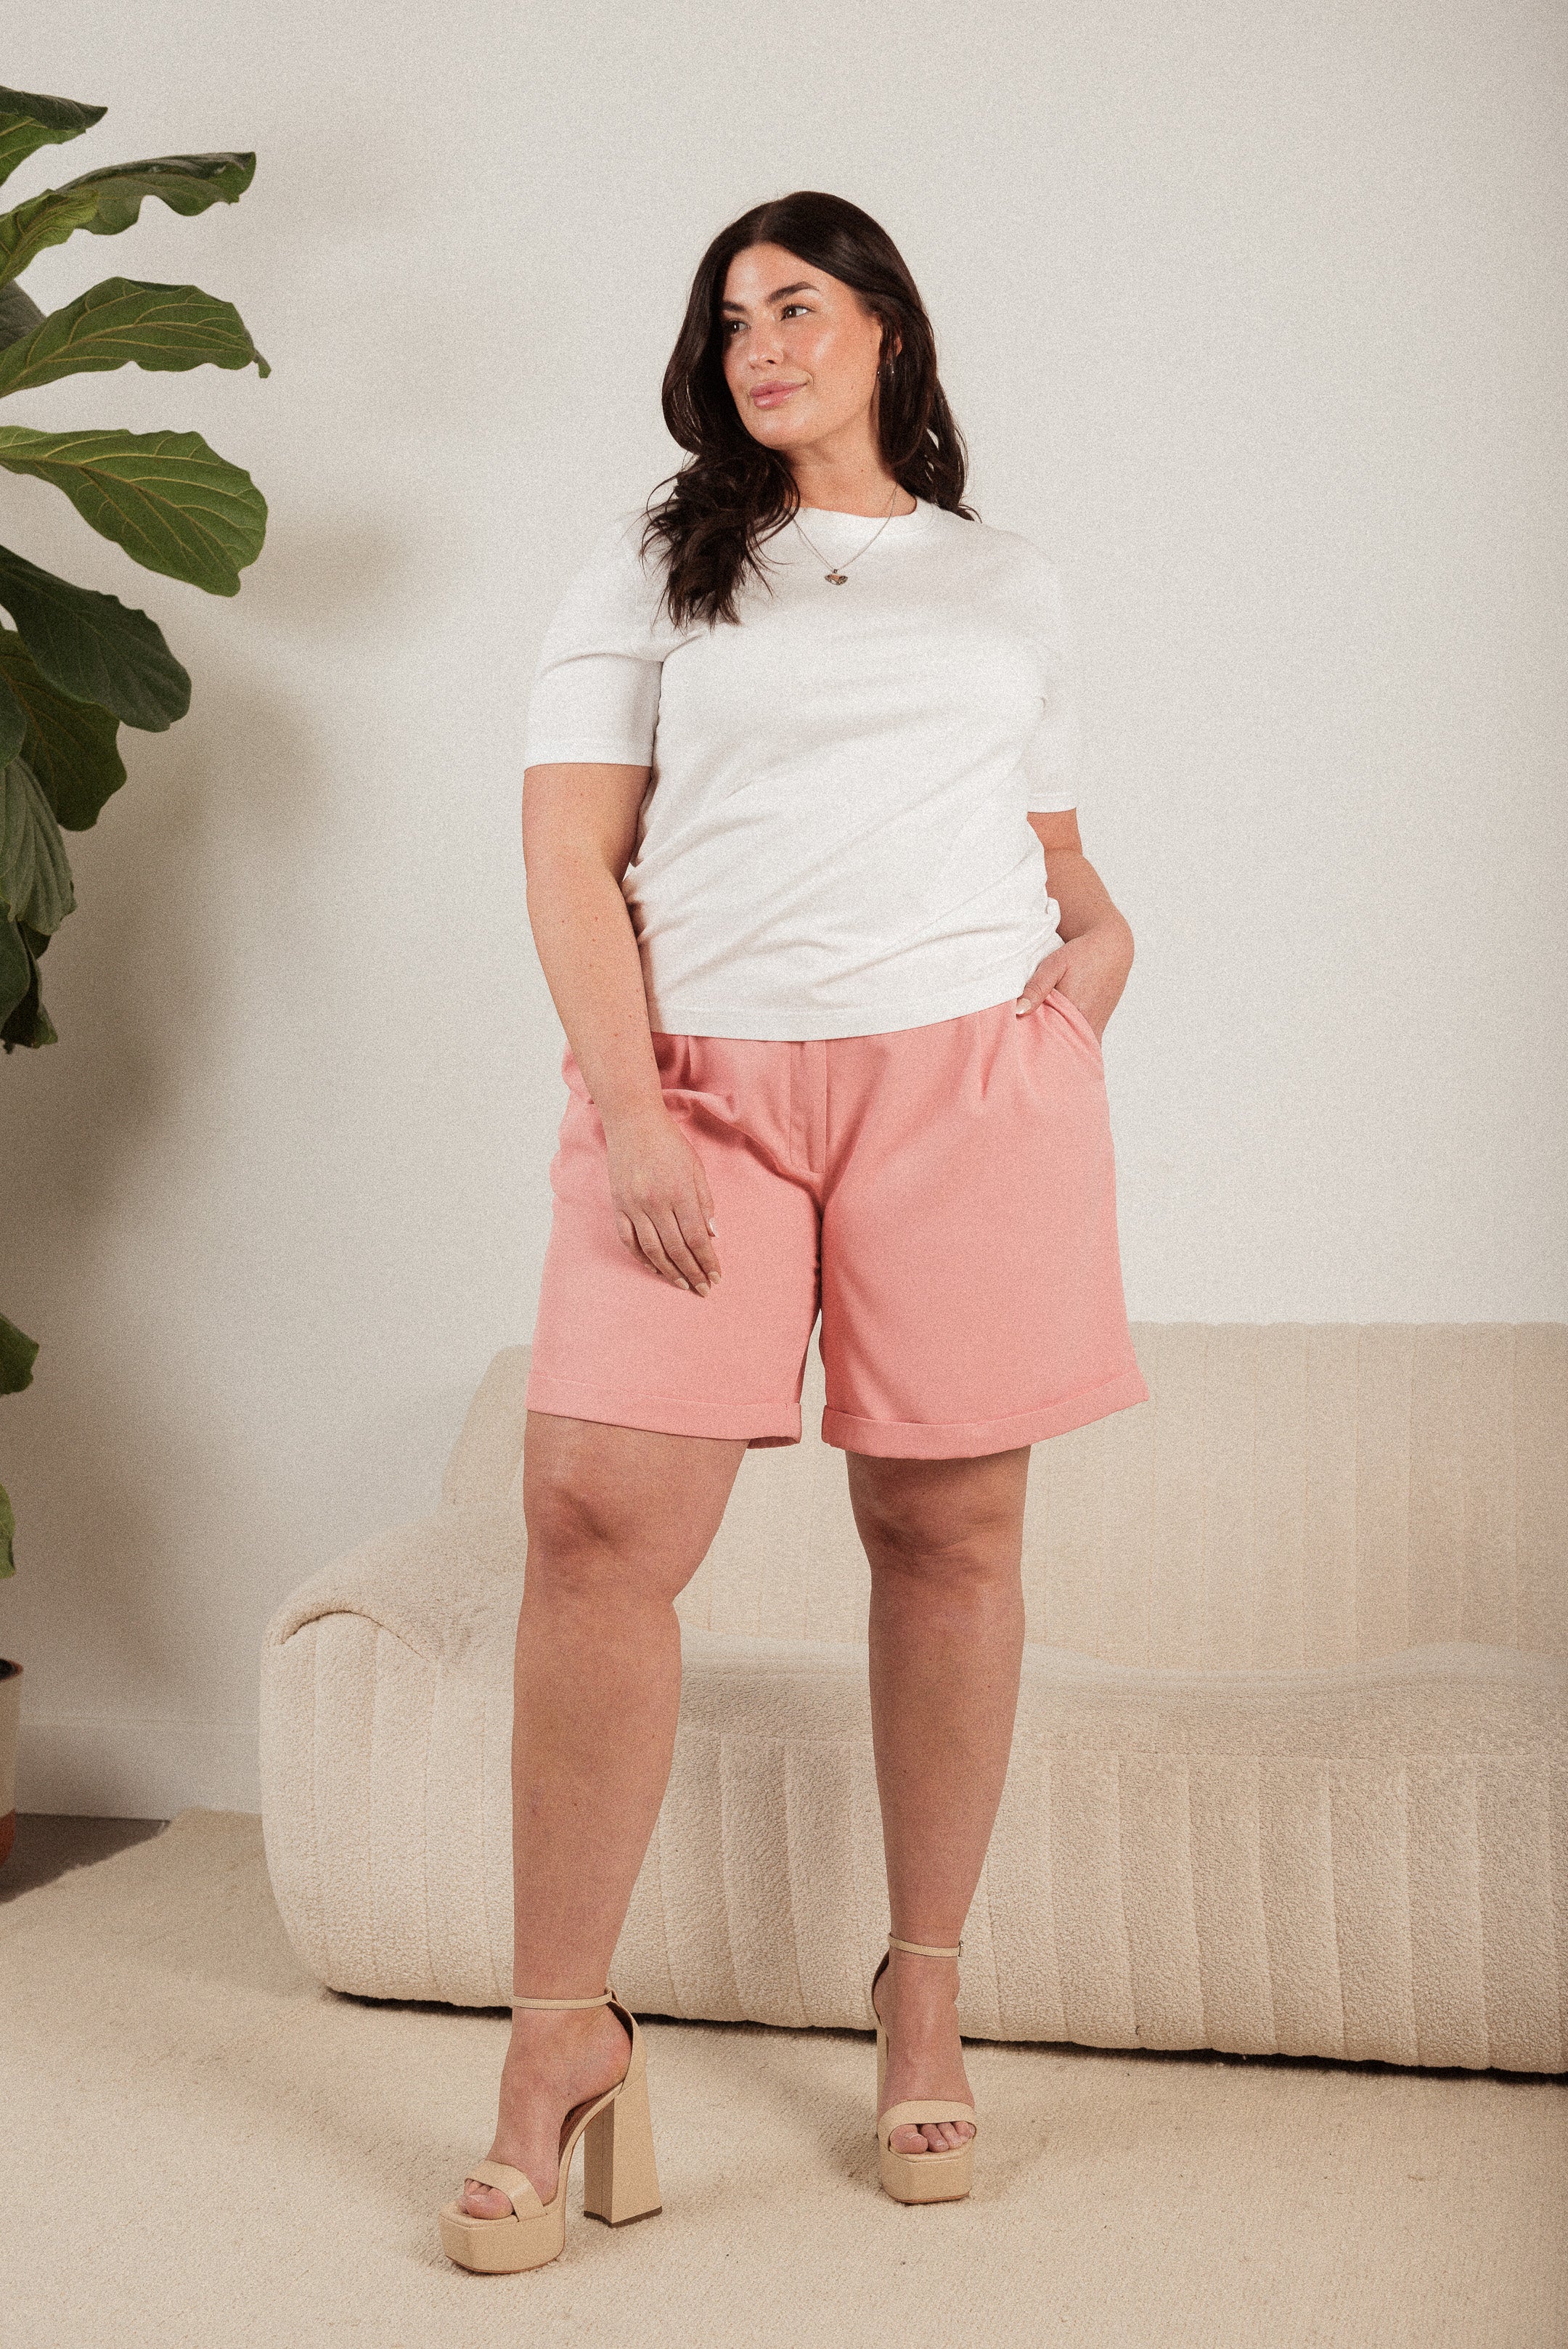 bermuda shorts rose et tshirt blanc